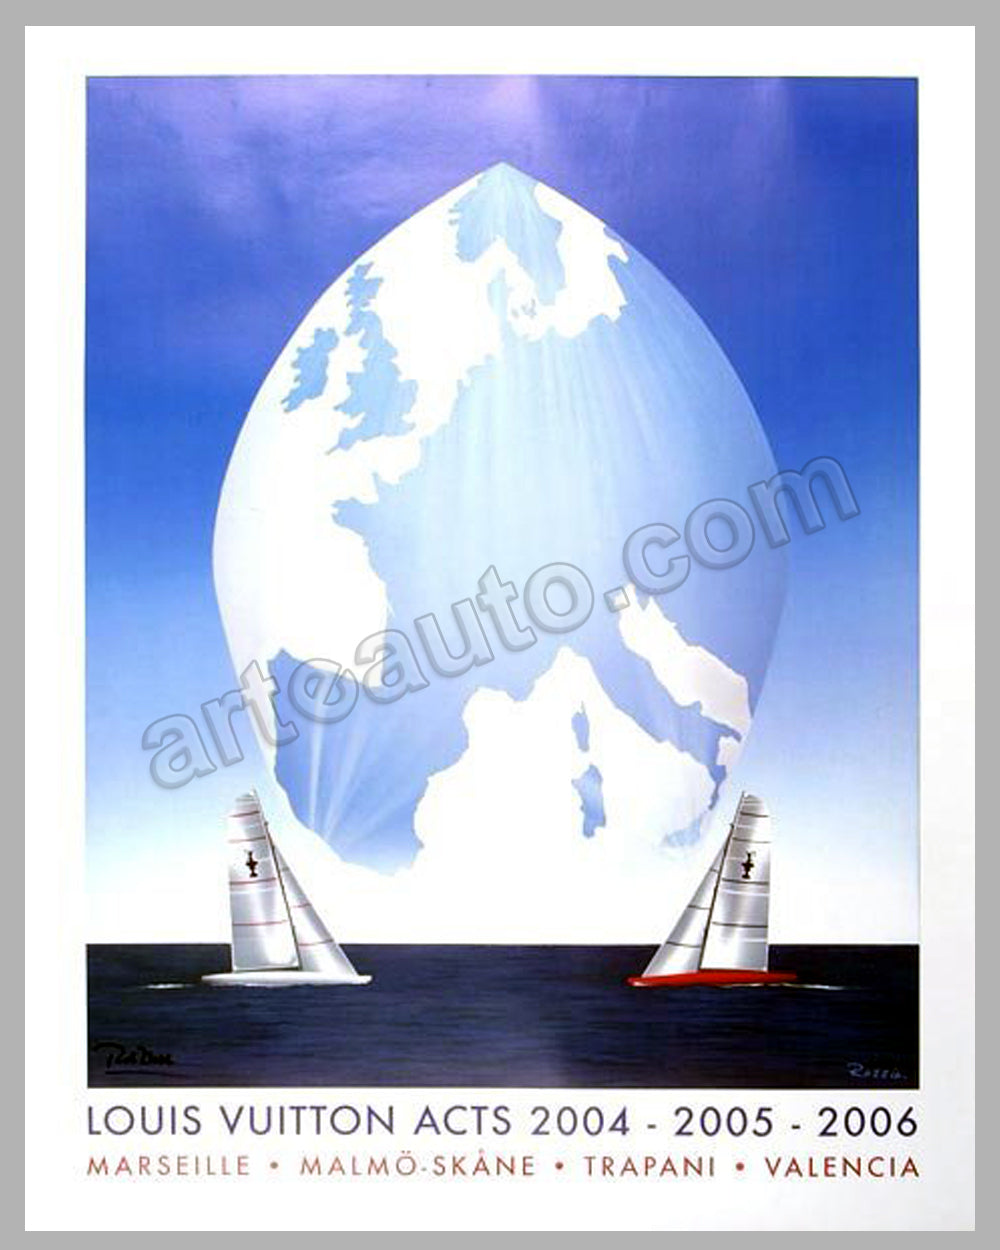 Louis Vuitton Traveling Style Exhibition Victoria & Albert Museum 1985  Poster